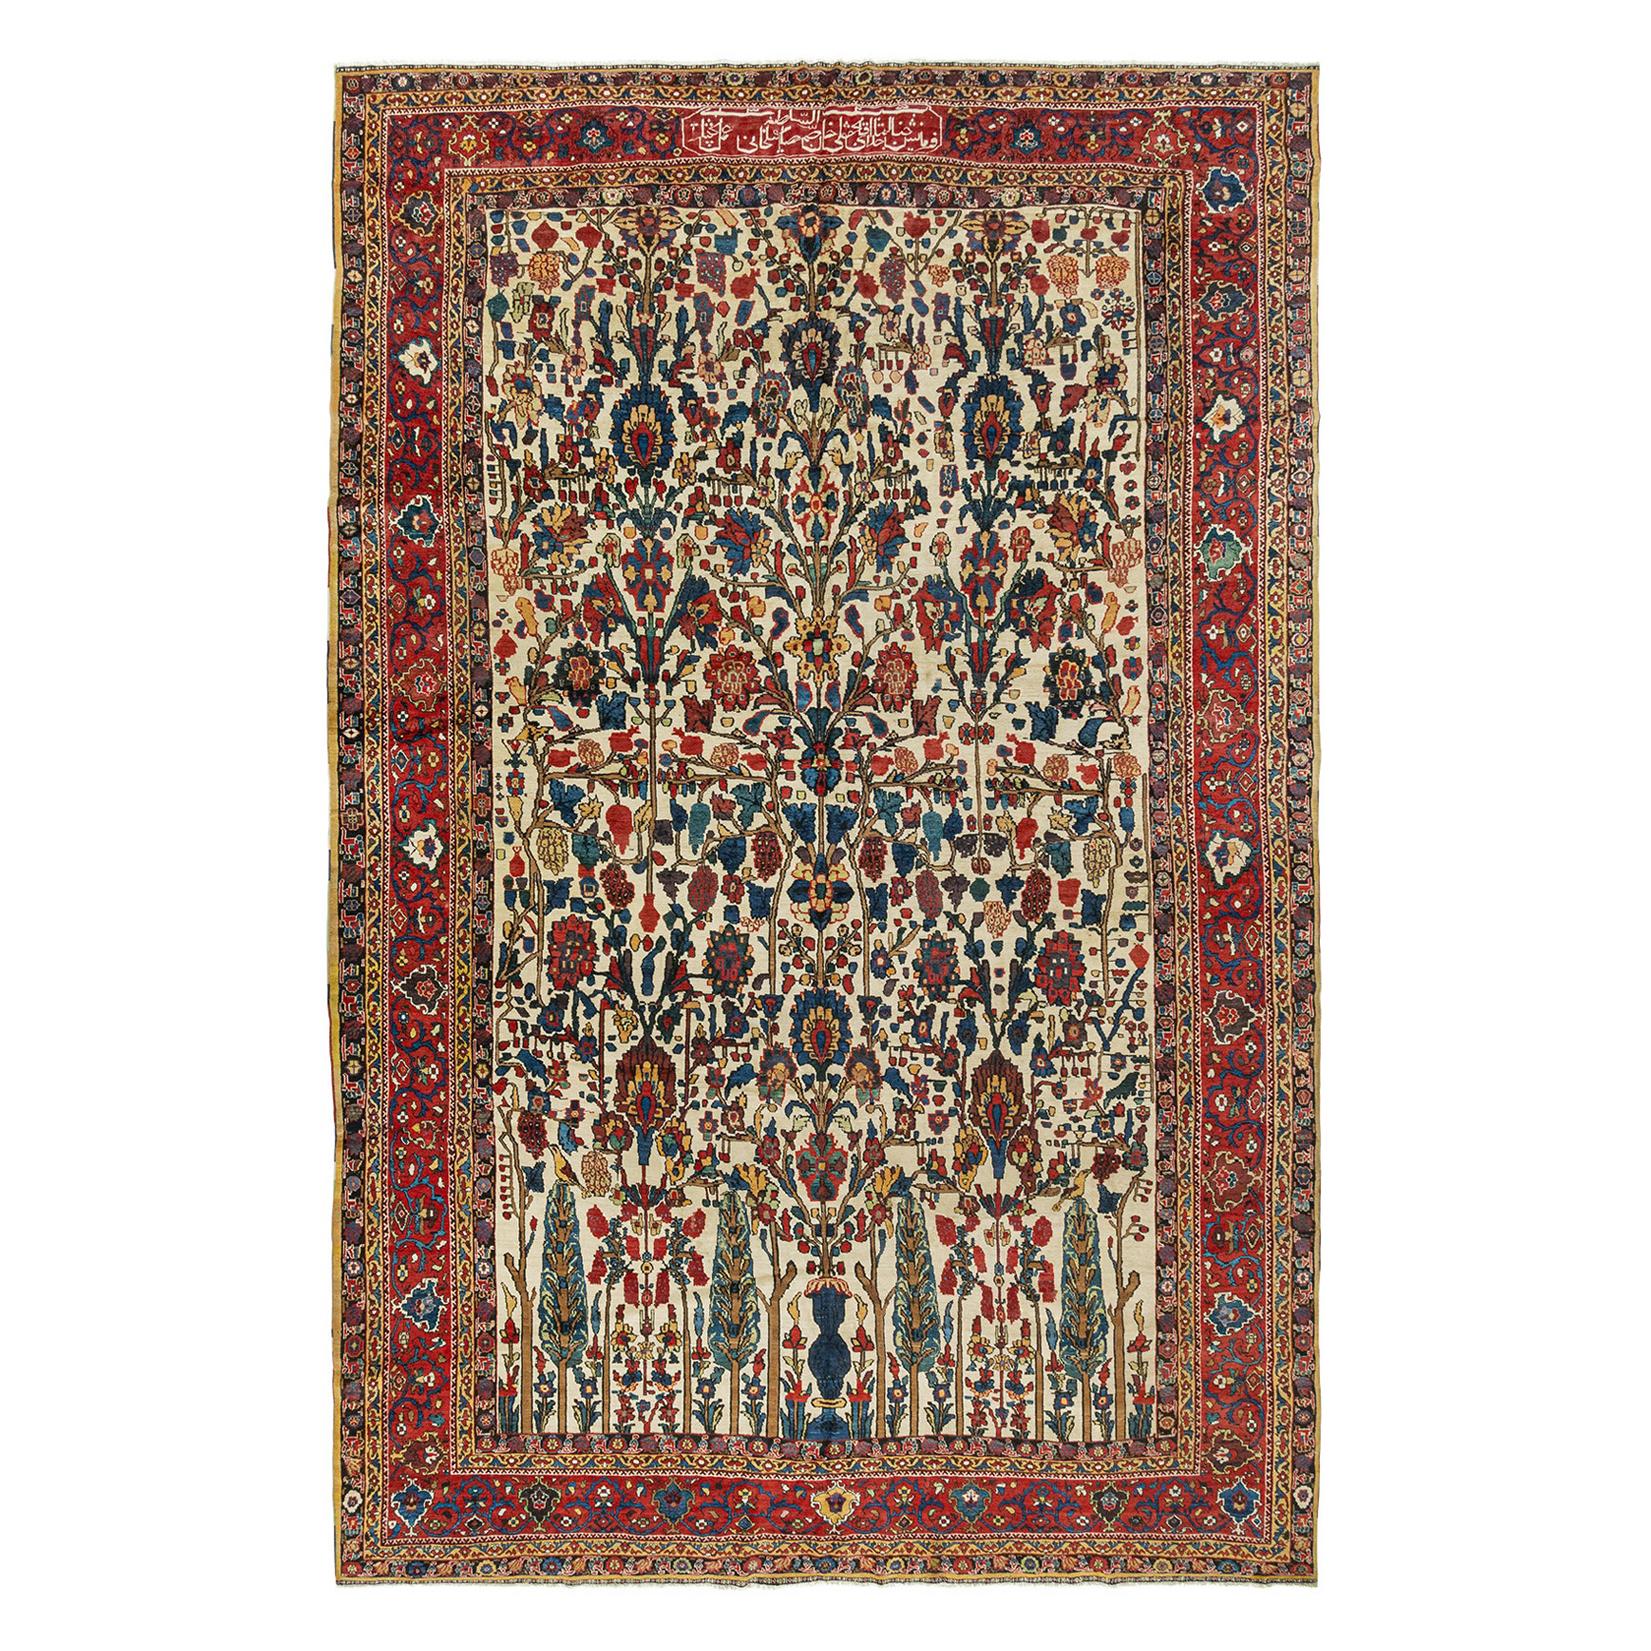 Oversize Antique Persian Baktiari Rug, circa 1890  12' x 18'10